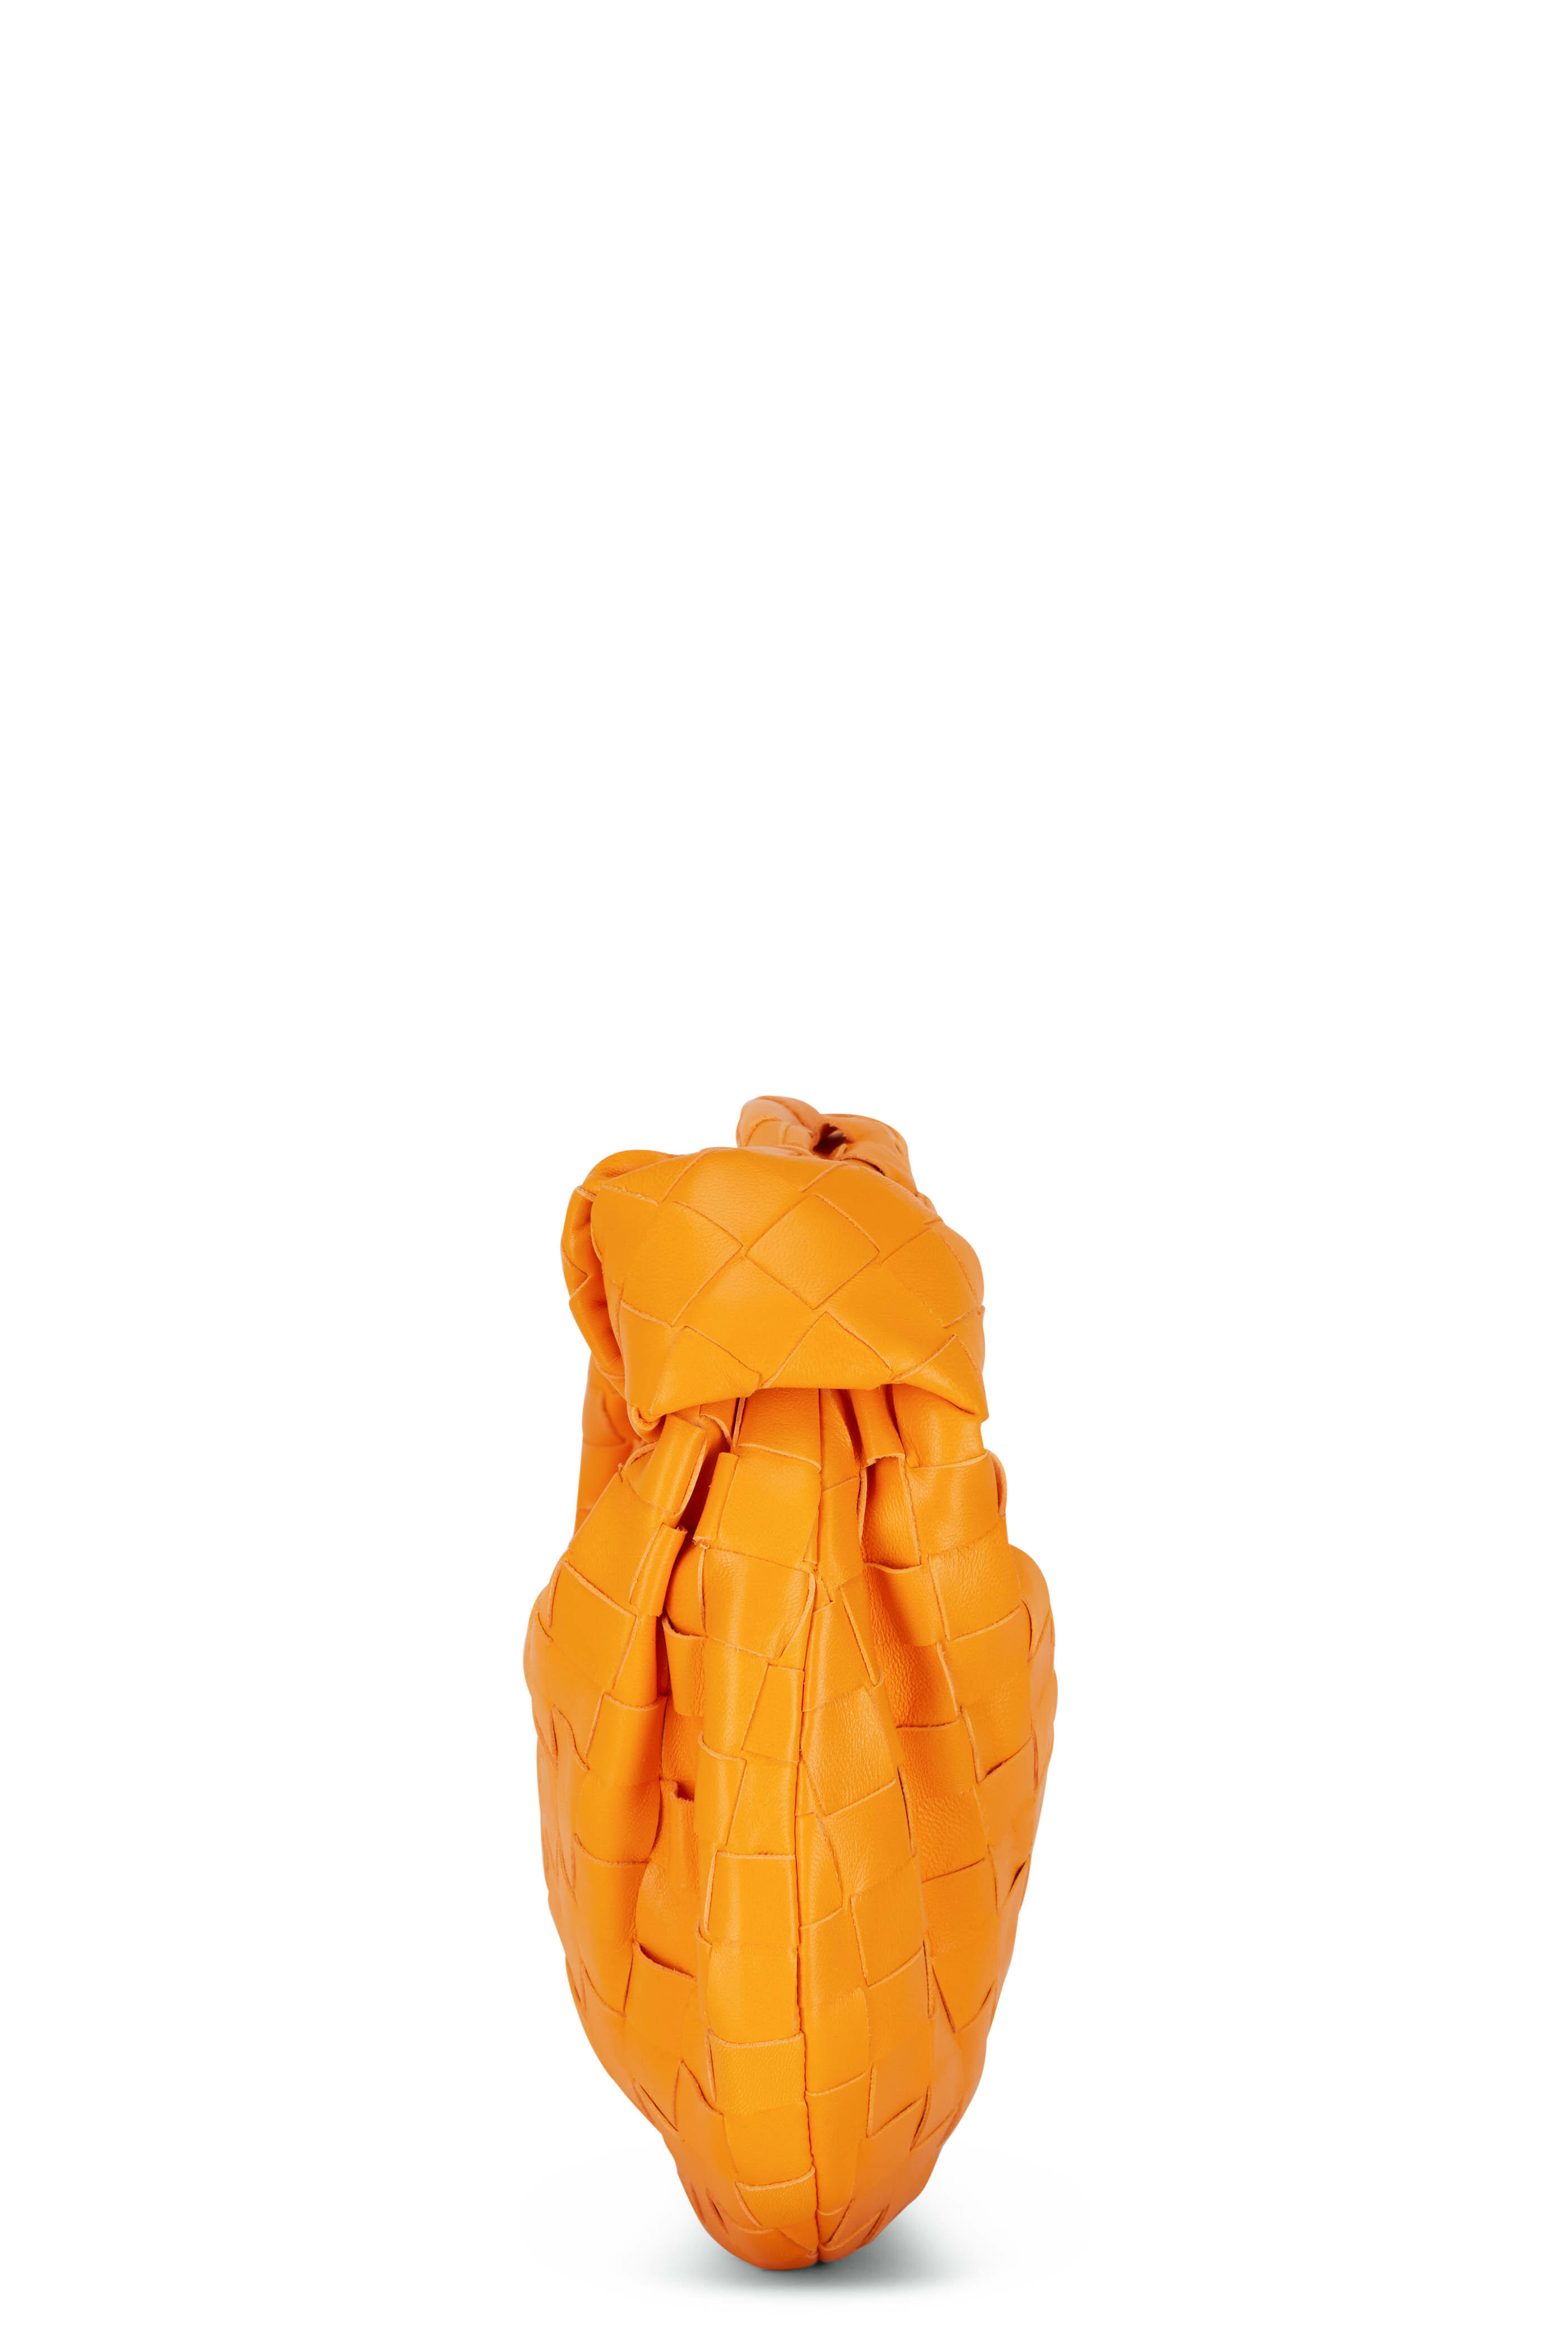 Bags – Tangerine Boutique